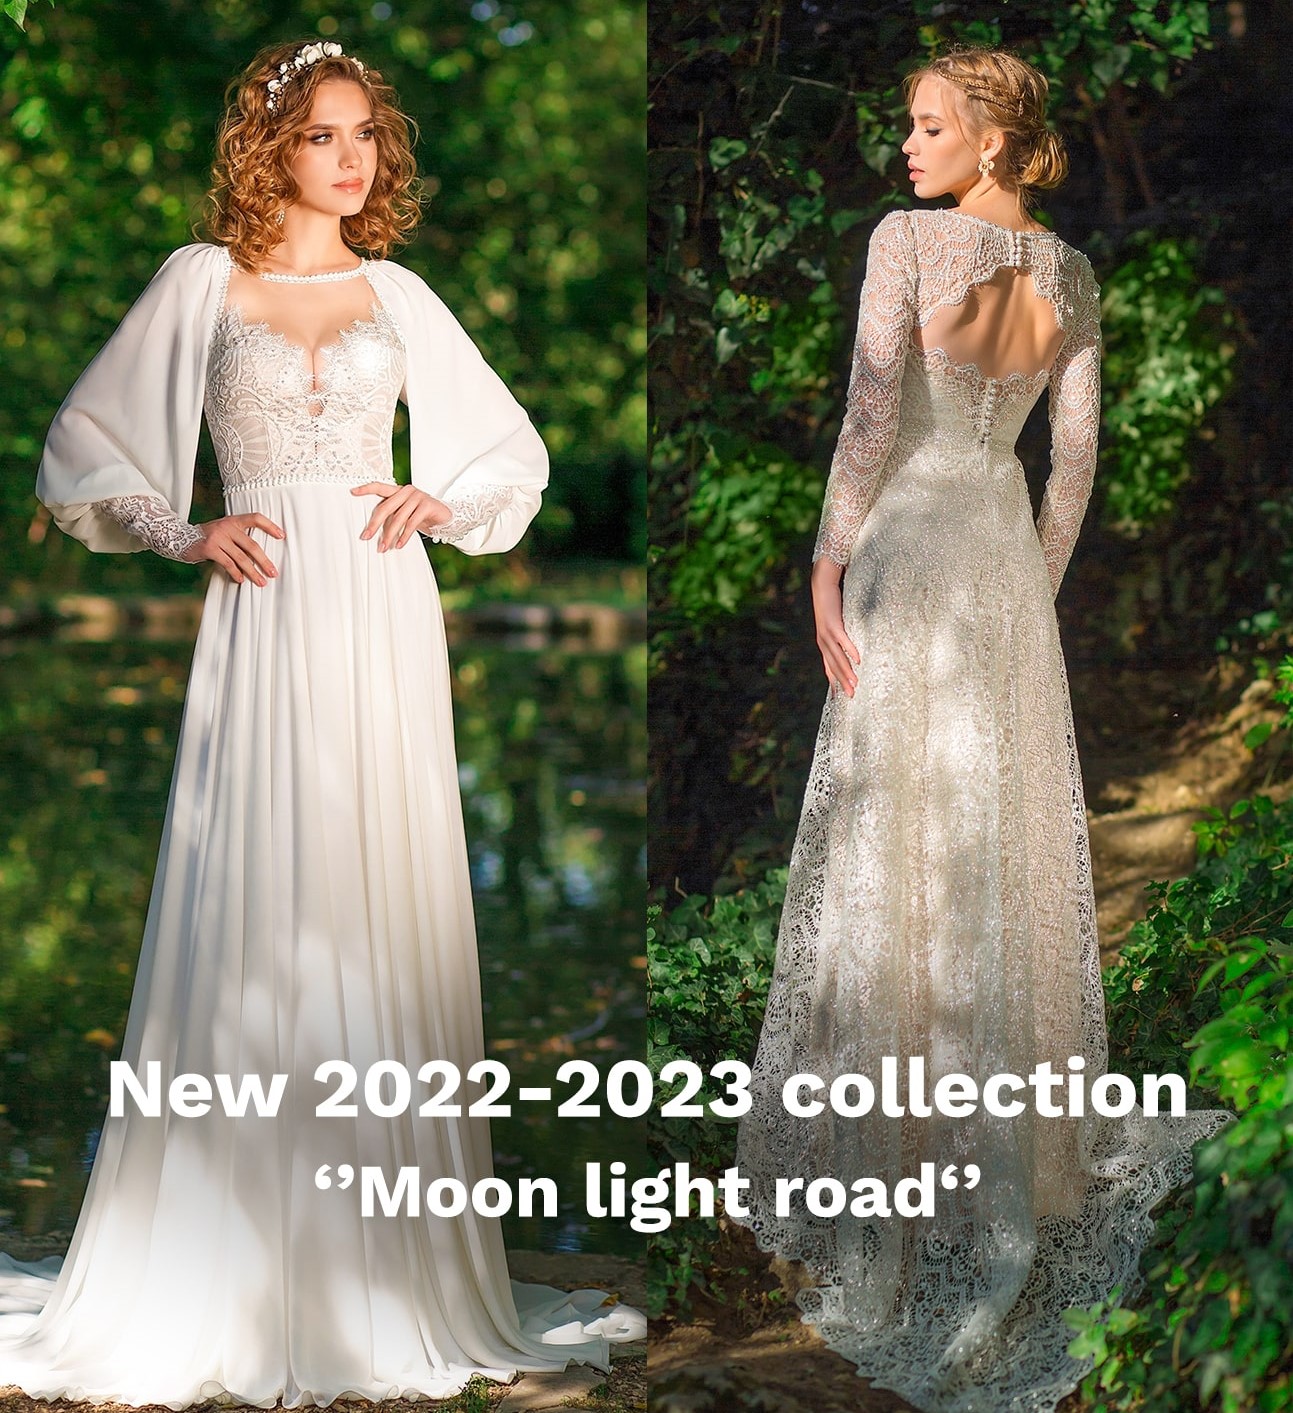 New 2023 wedding dresses